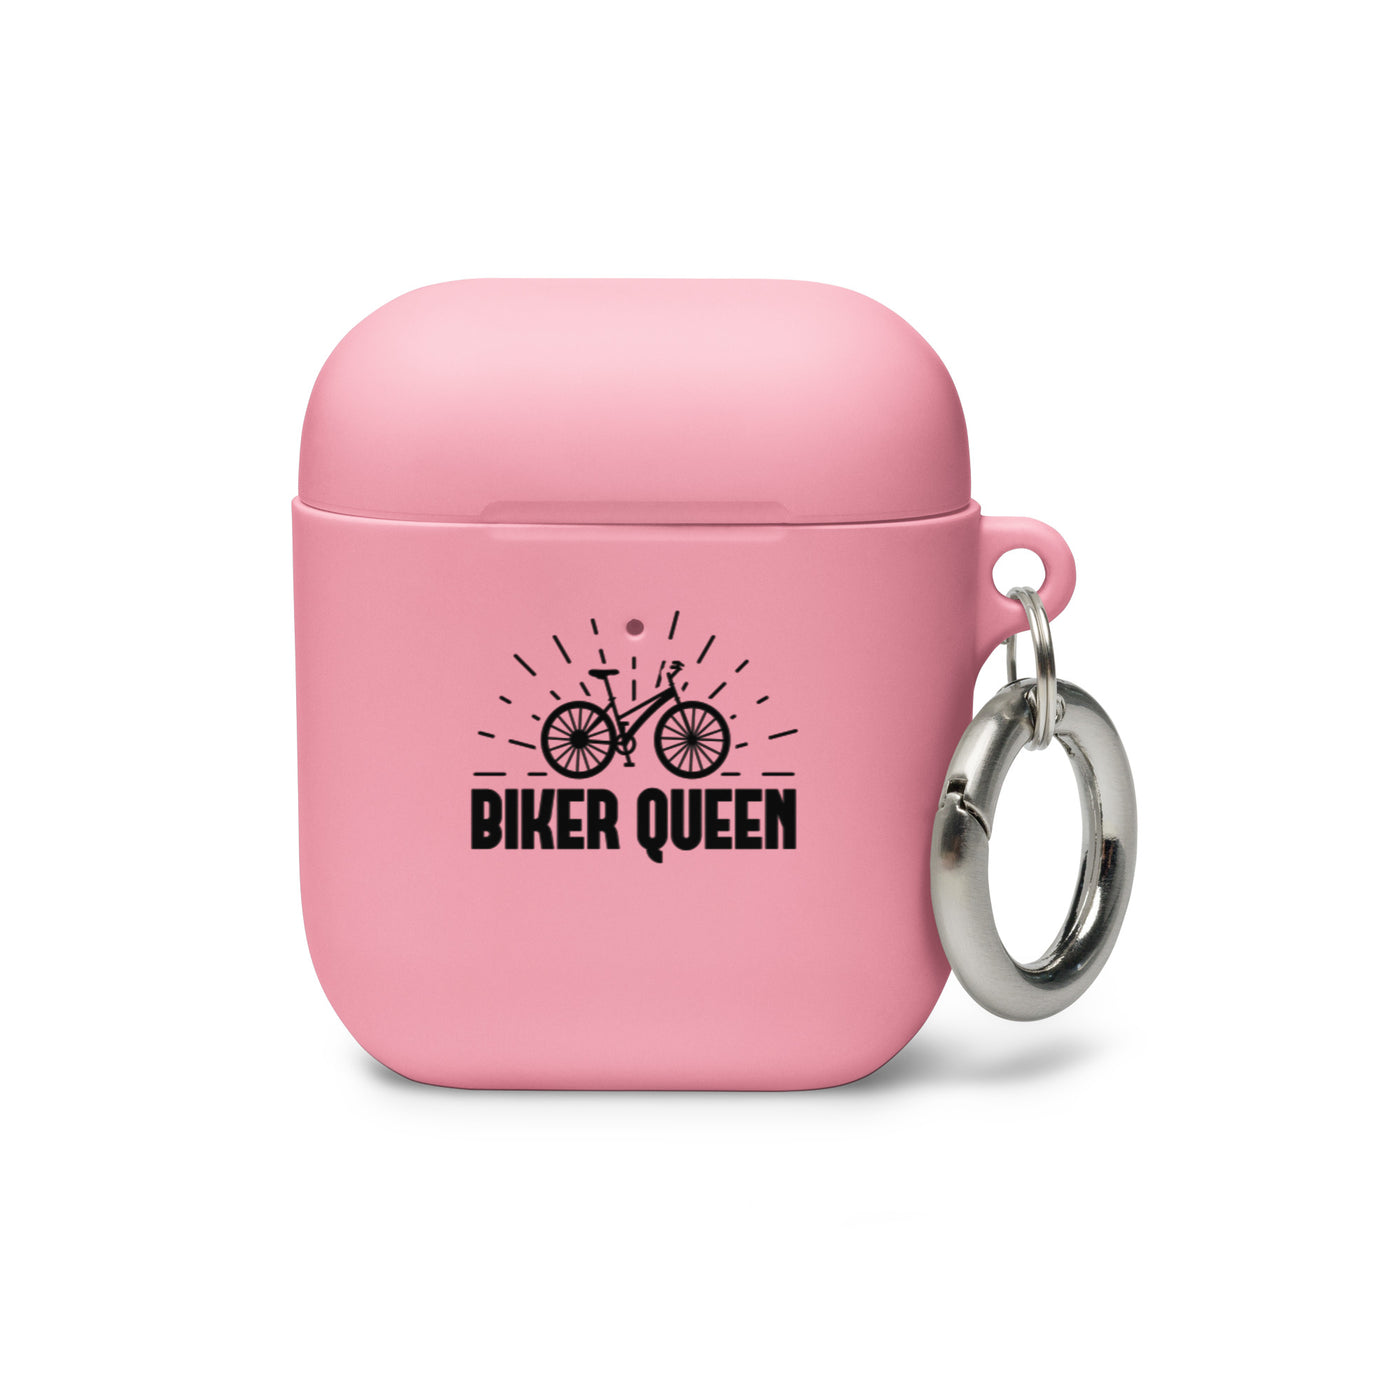 Biker Queen - AirPods Case fahrrad Pink AirPods